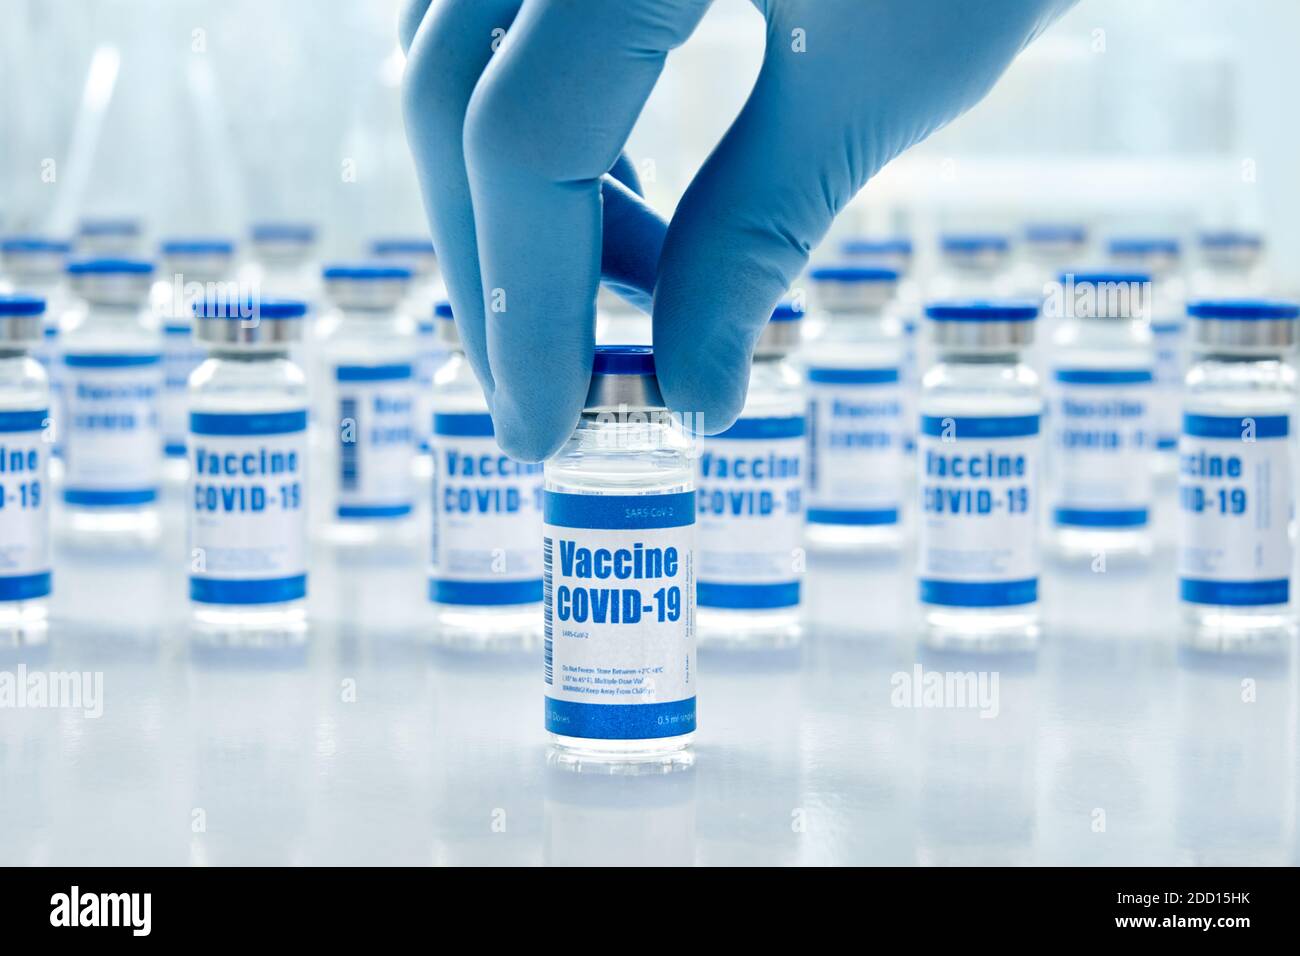 Covid 19 vaccine vial bottles, corona virus cure manufacture concept. Stock Photo